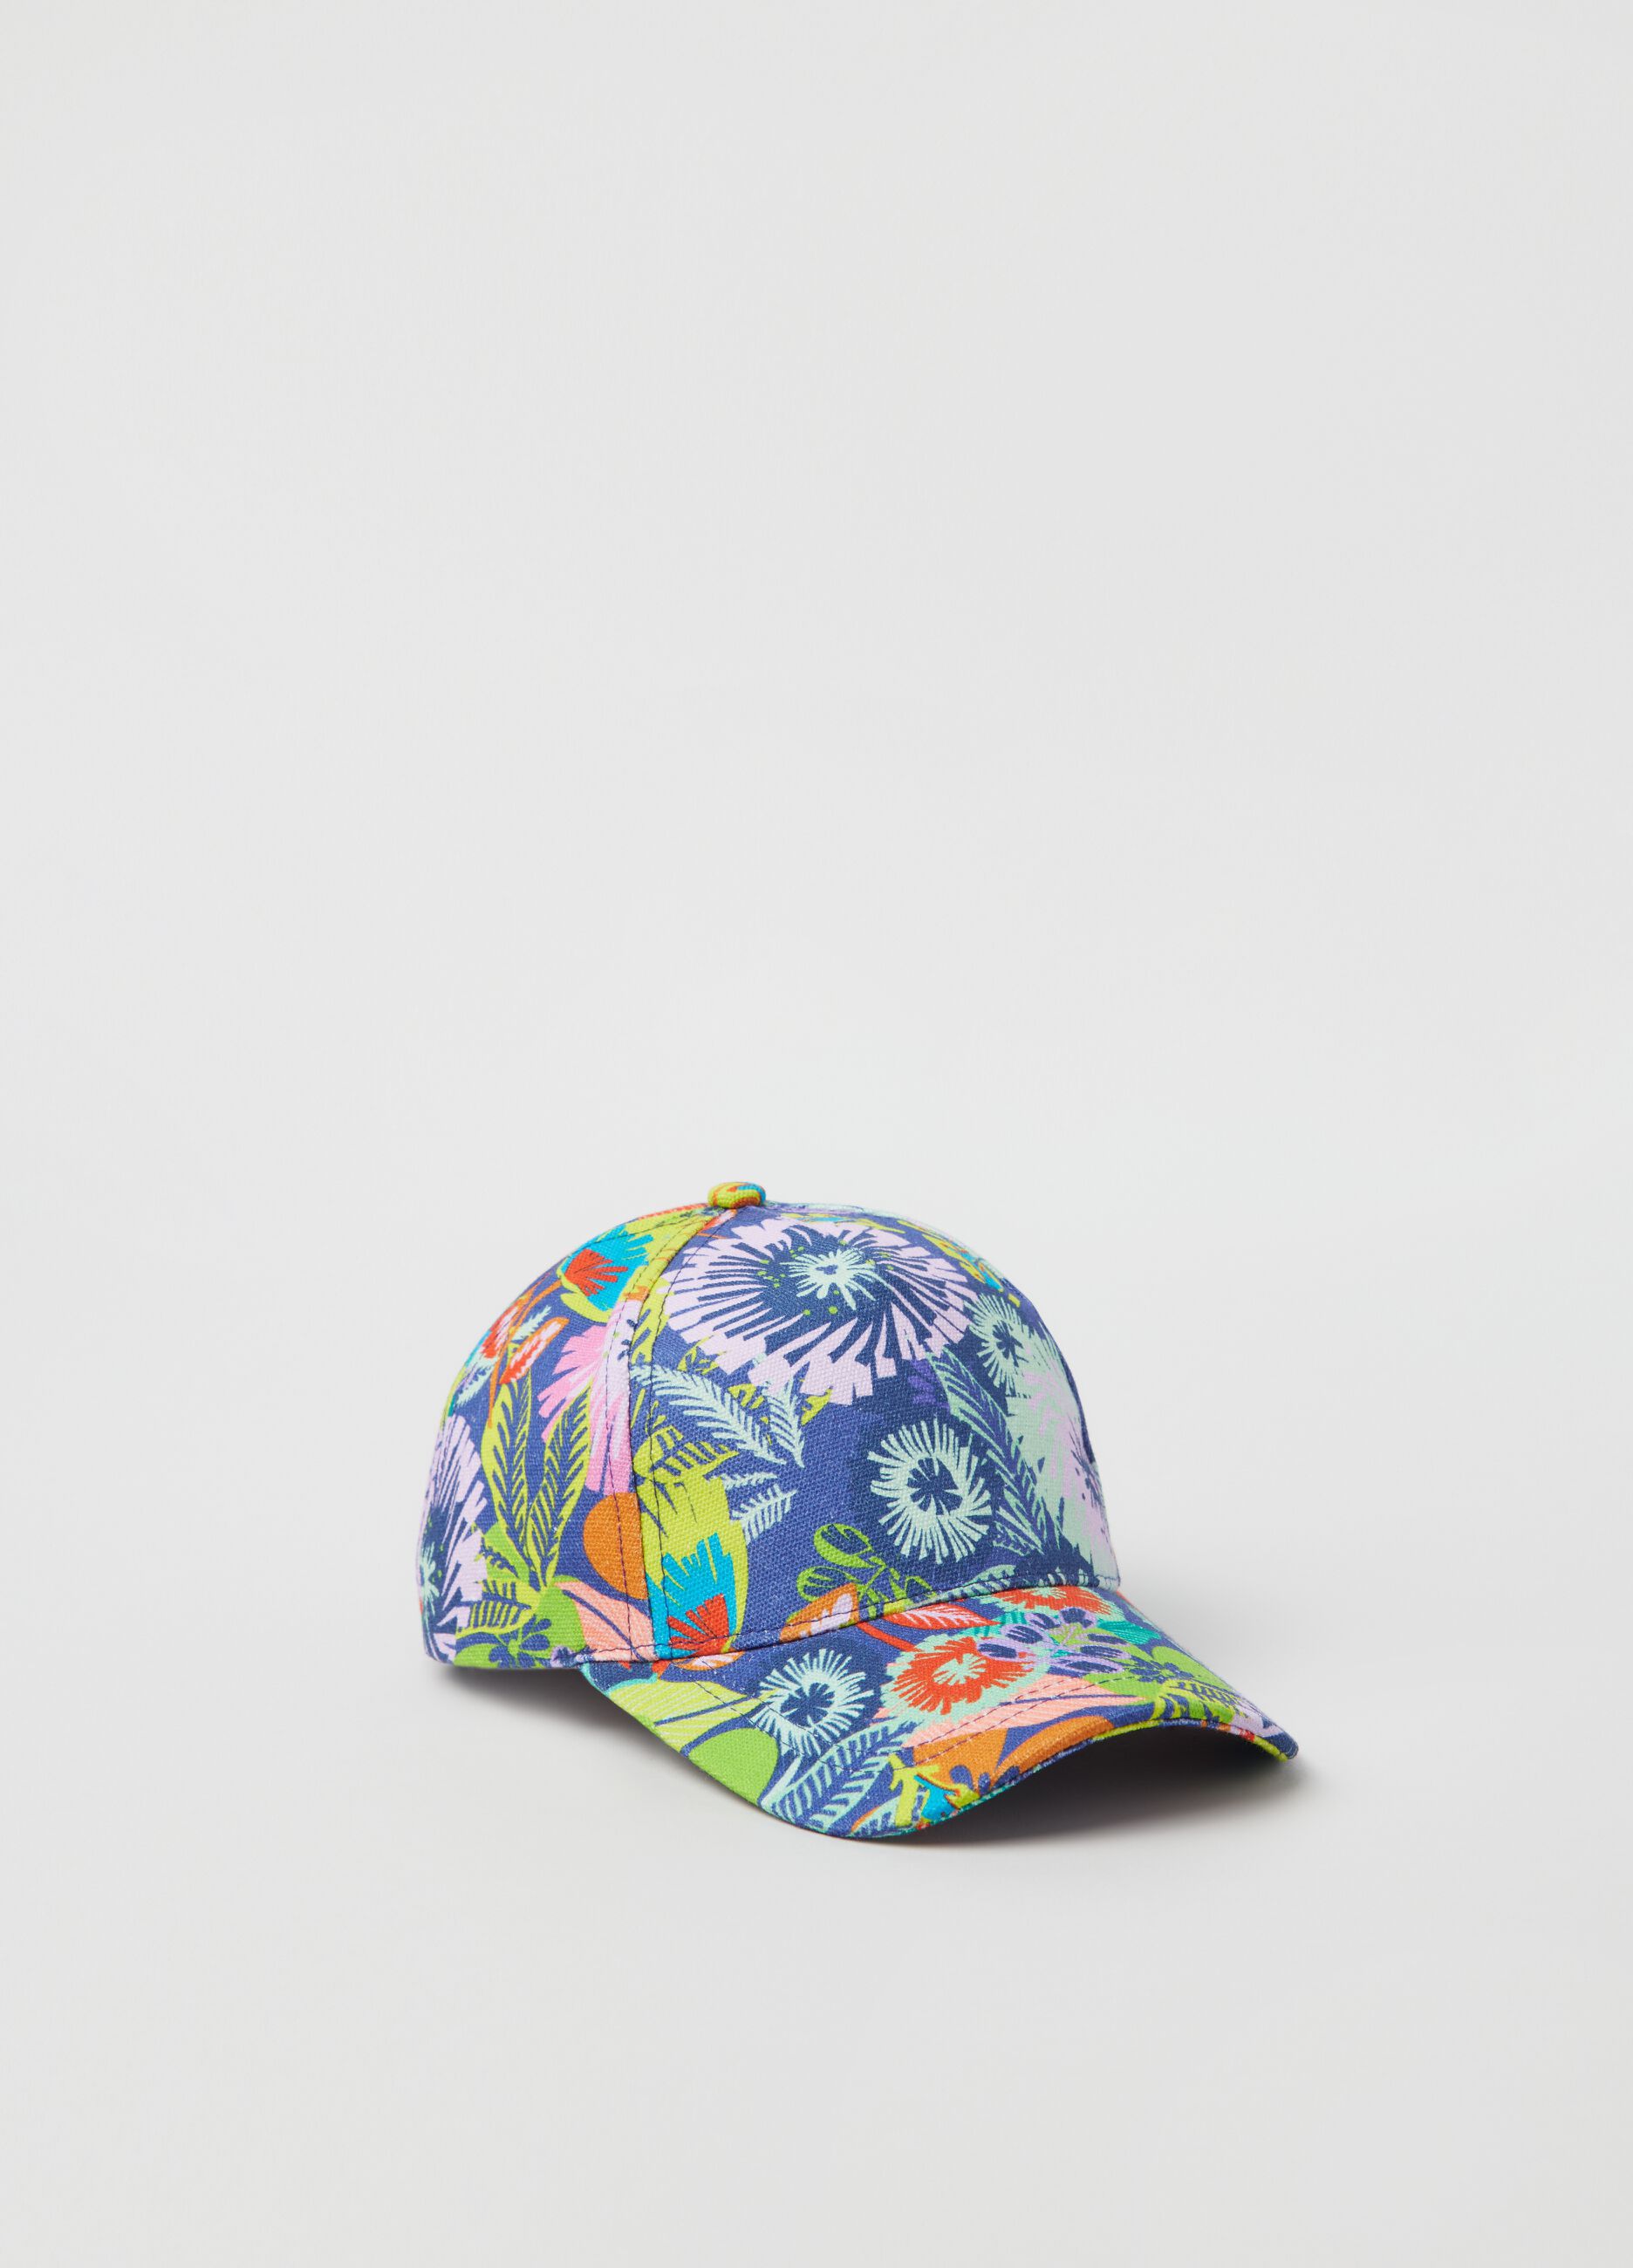 Baseball cap with flowers print